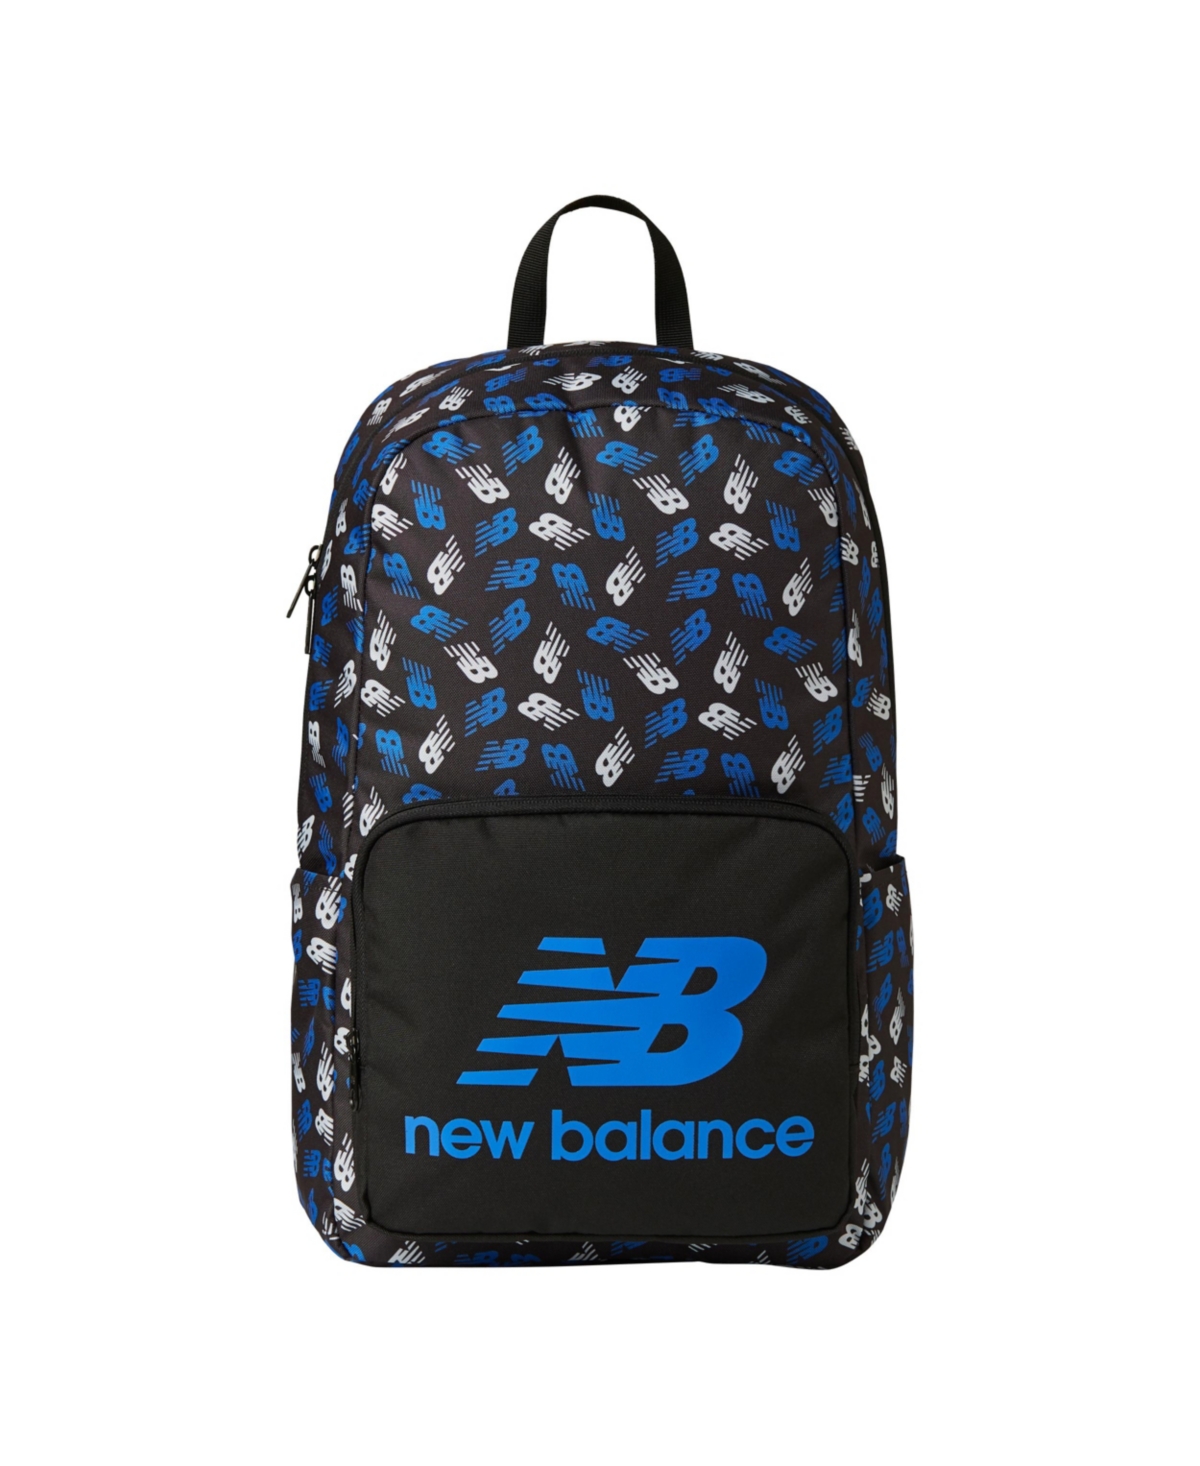 New Balance Kids Printed Backpack In Black